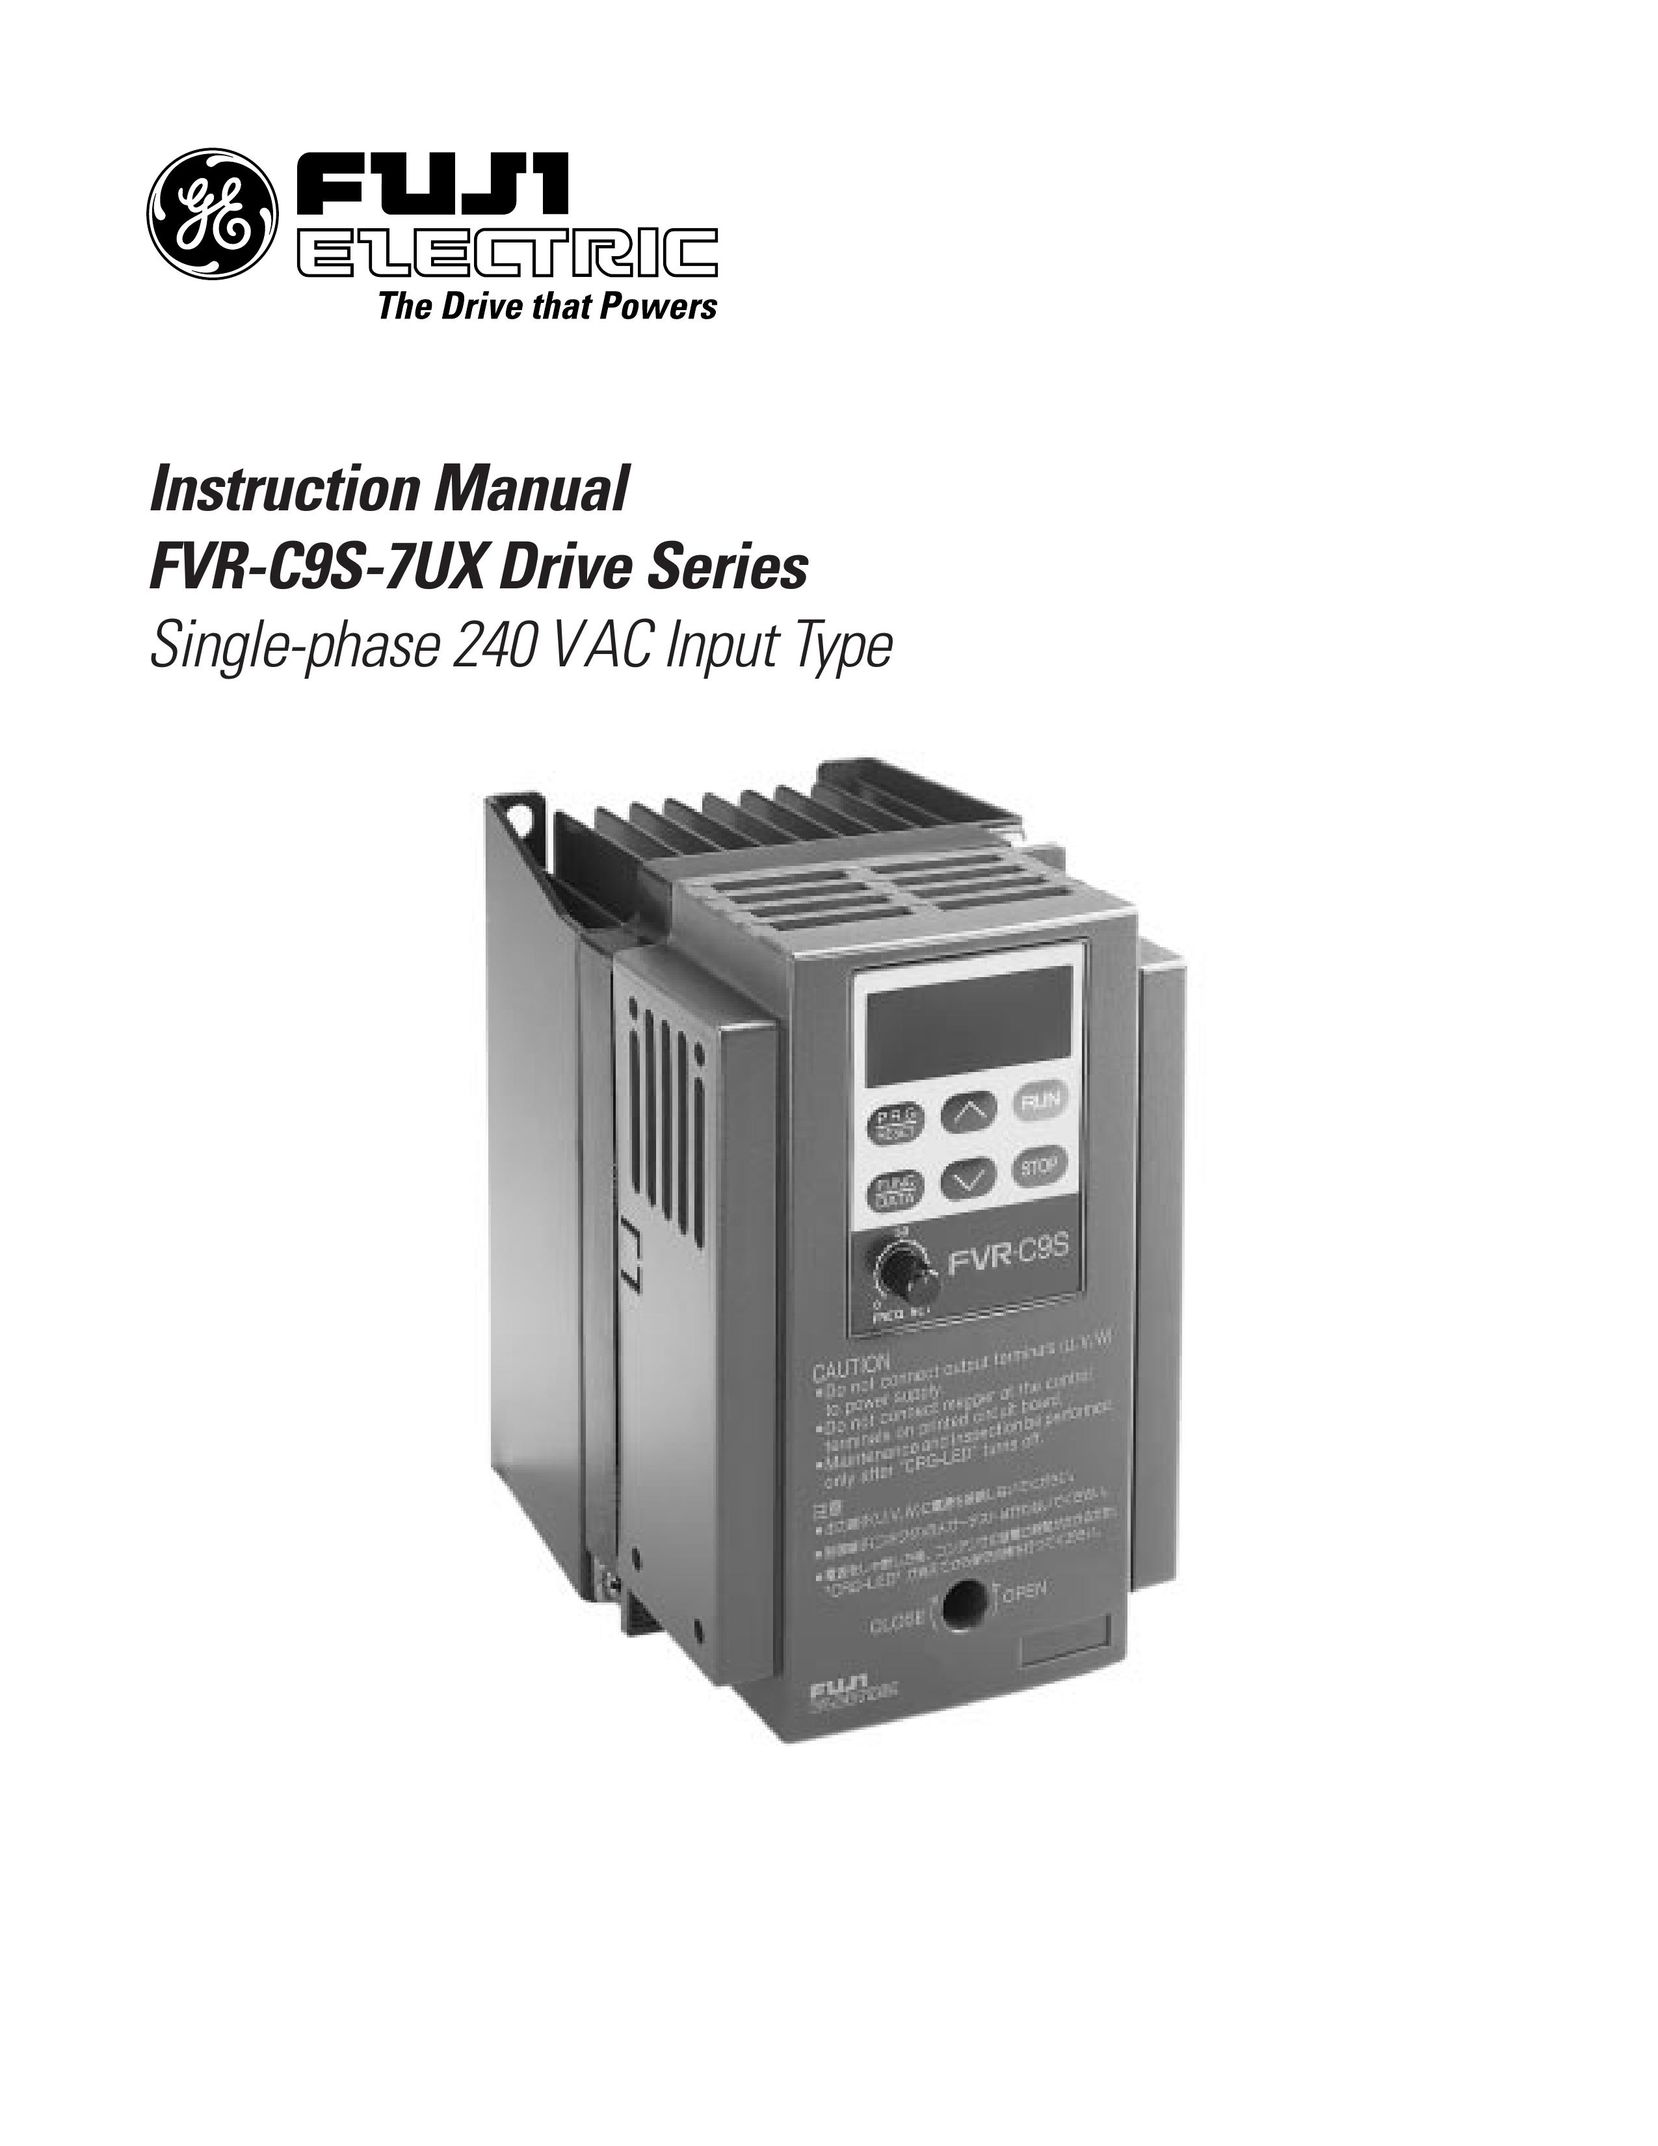 GE FVR-C9S-7UX Power Supply User Manual